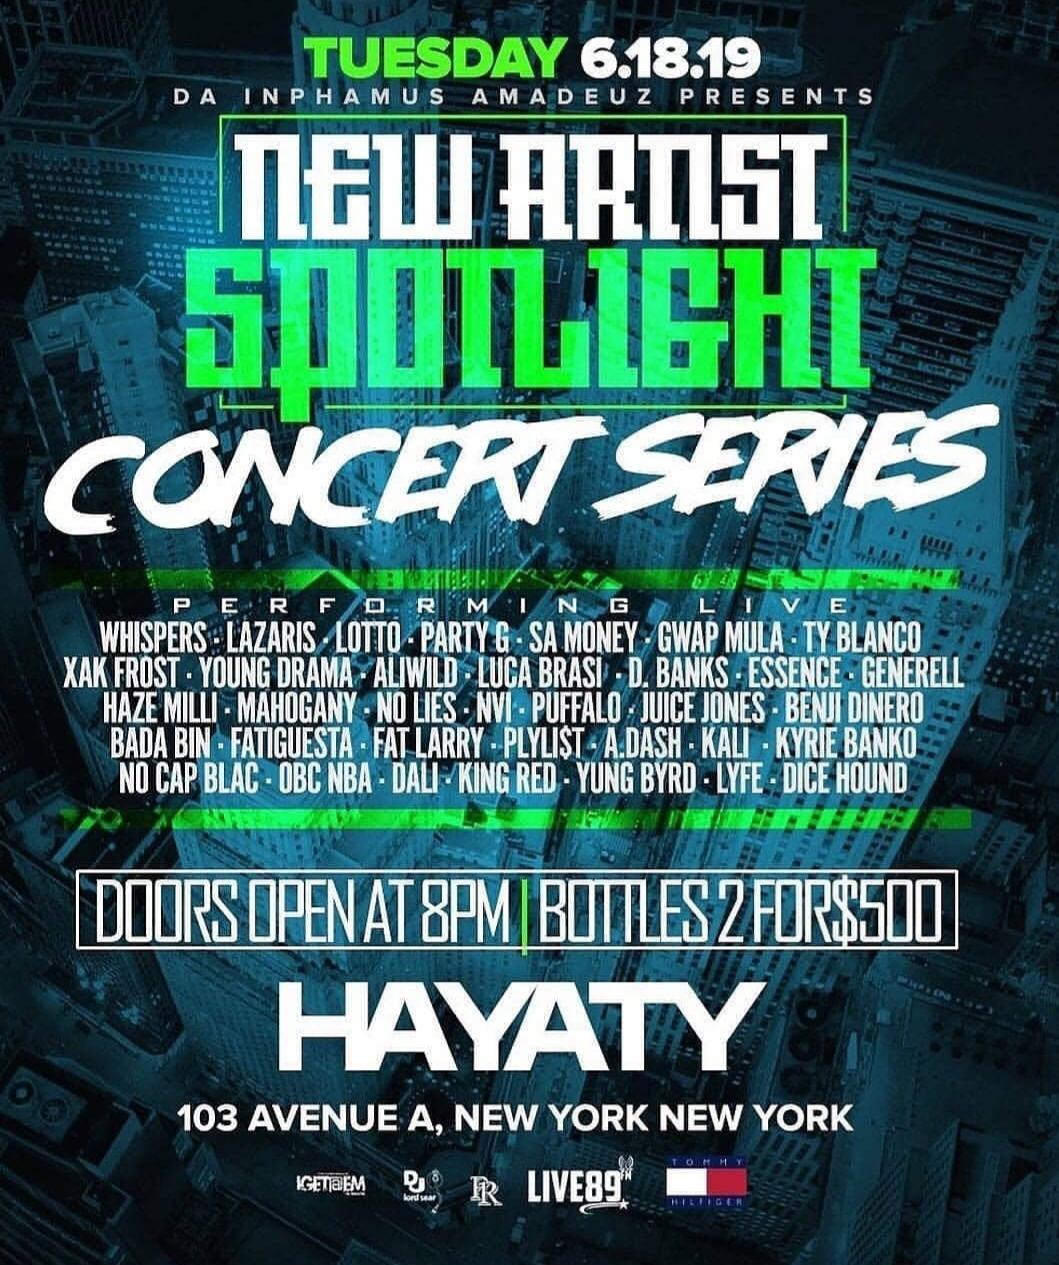 New Artist Spotlight Concert Series @ Hayaty Tuesday June 18, 2019